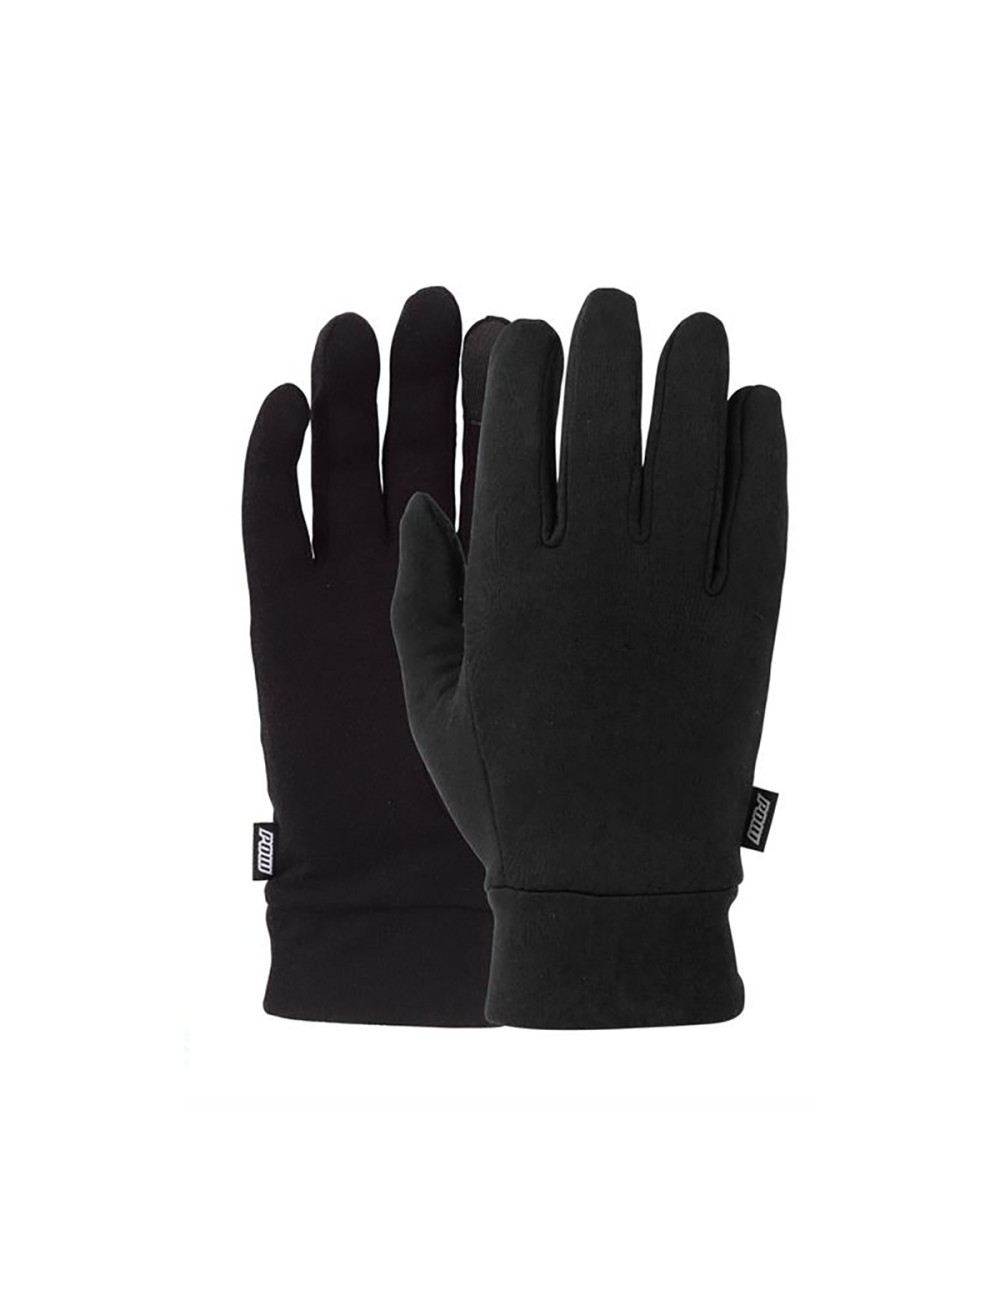 POW Micro Fleece Liner Glove - Black